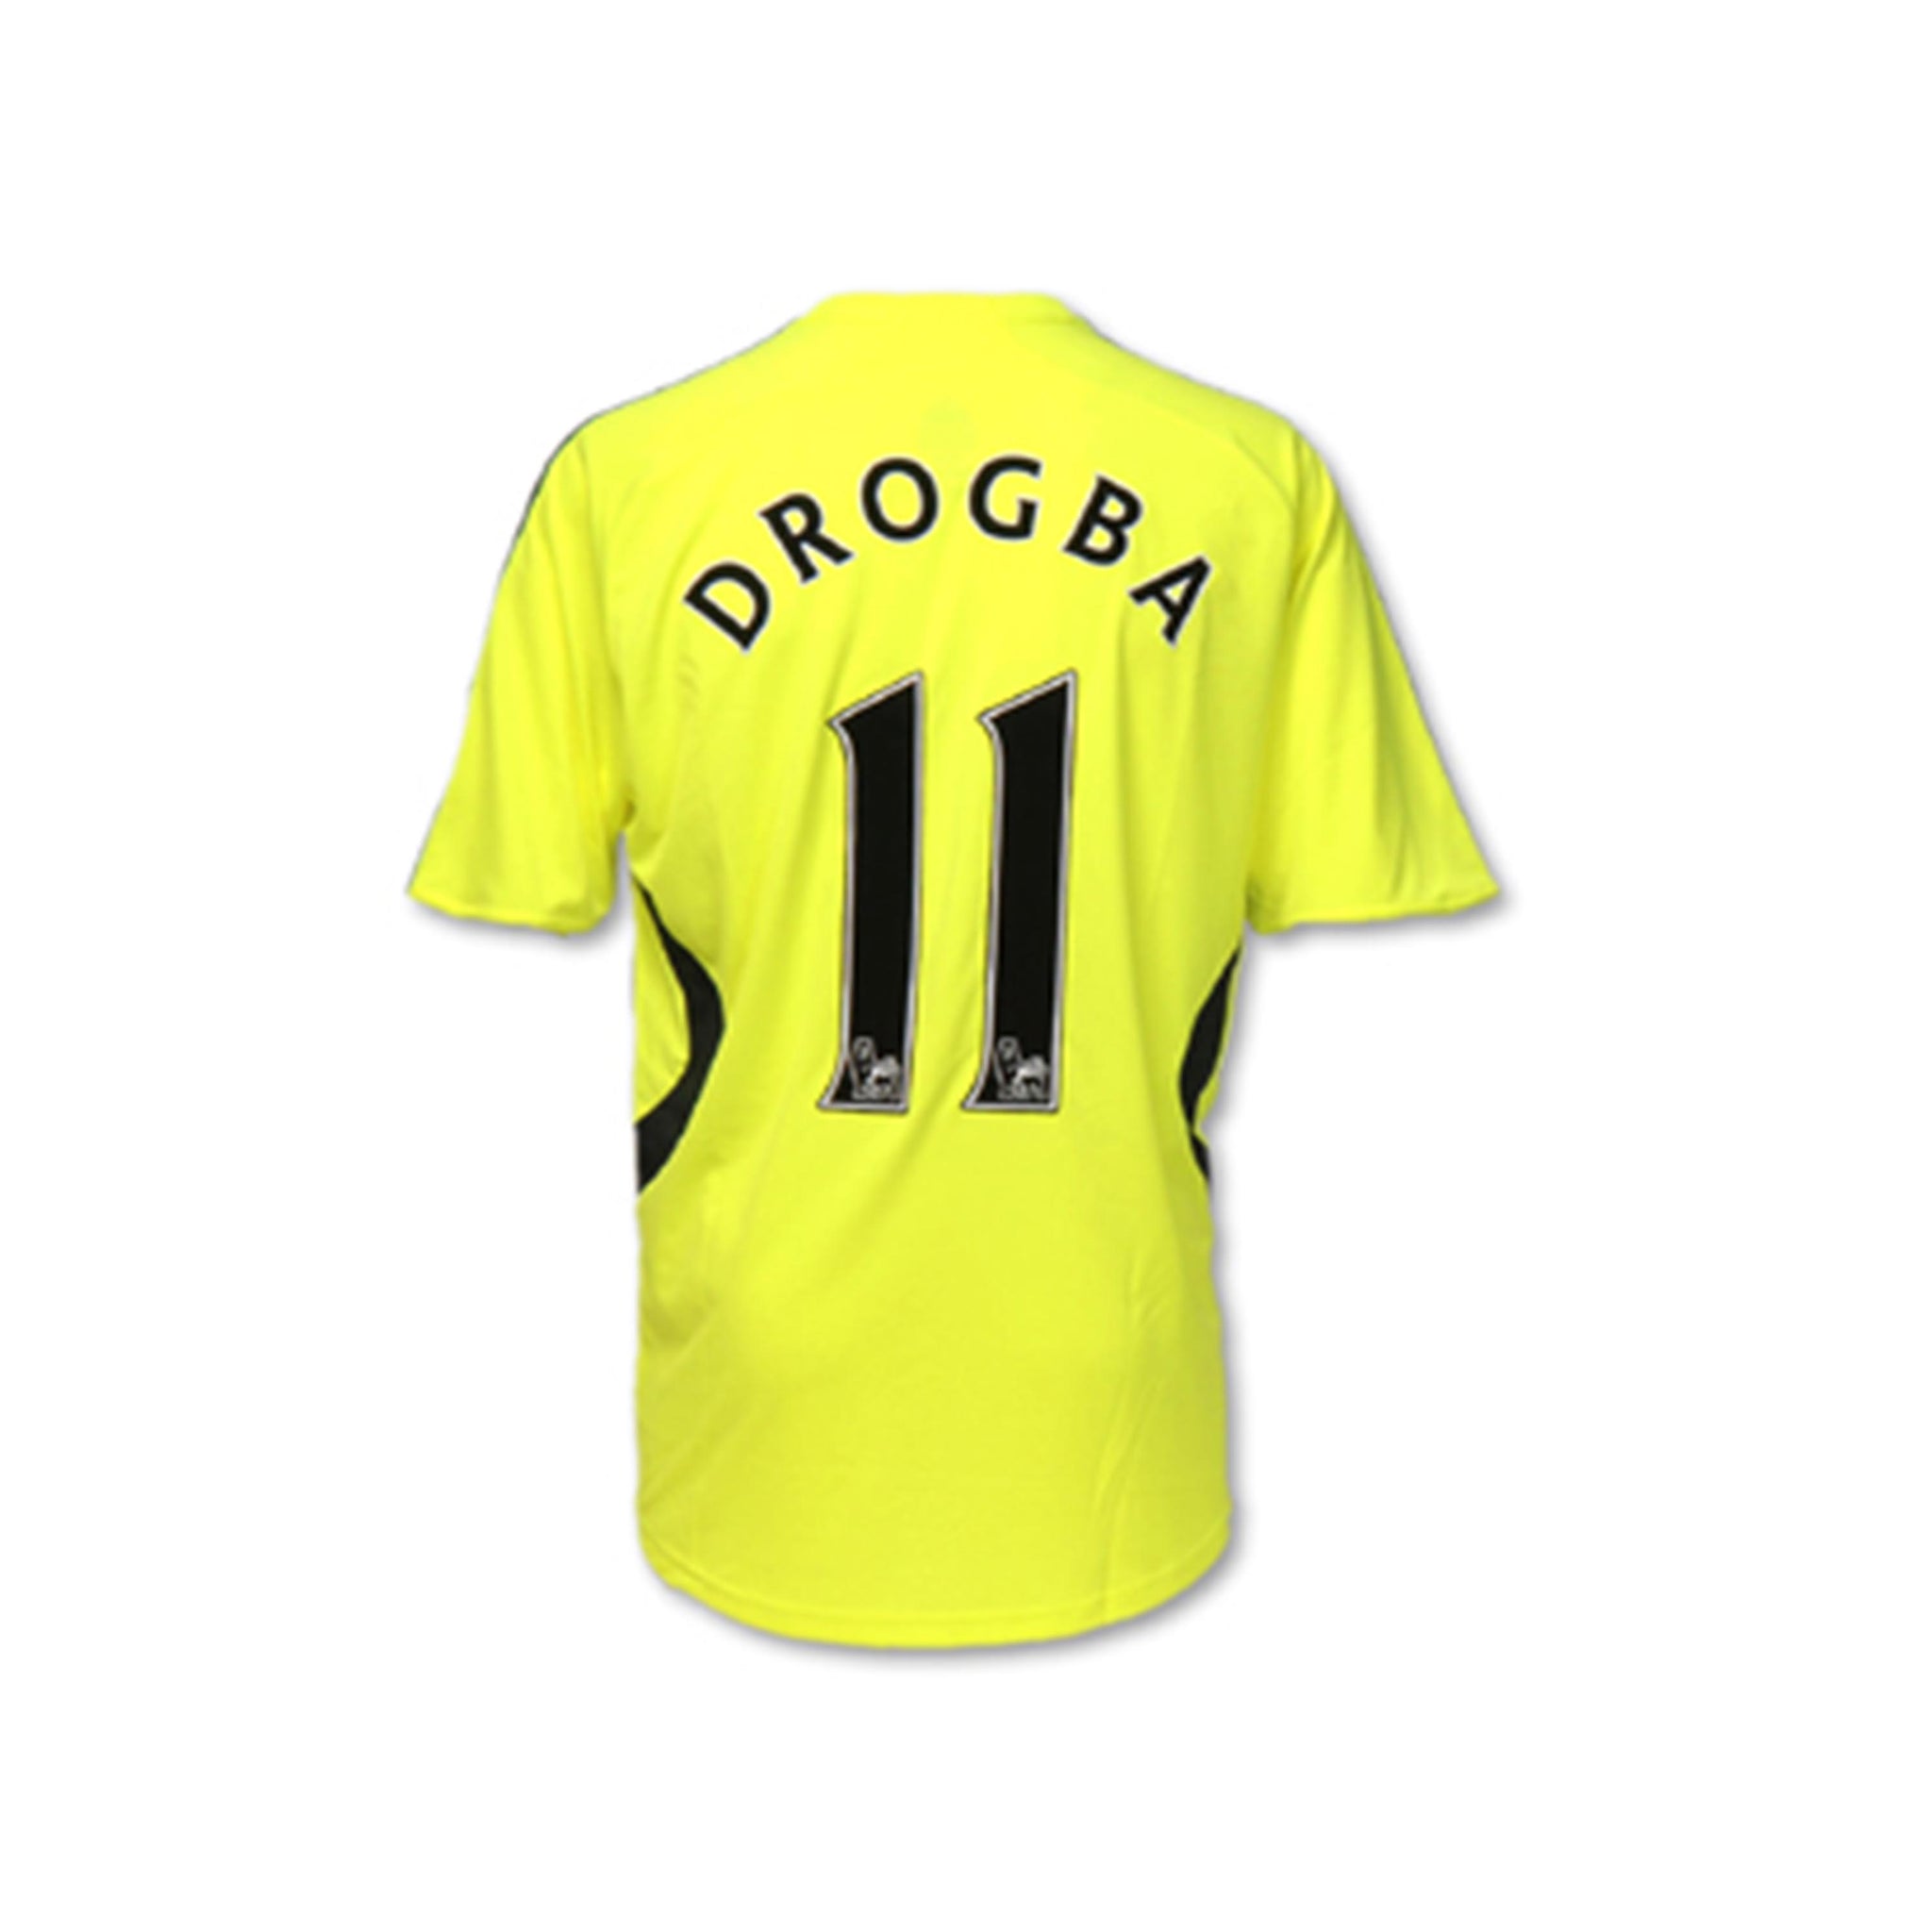 ADIDAS Chelsea FC Away DROGBA 07/08